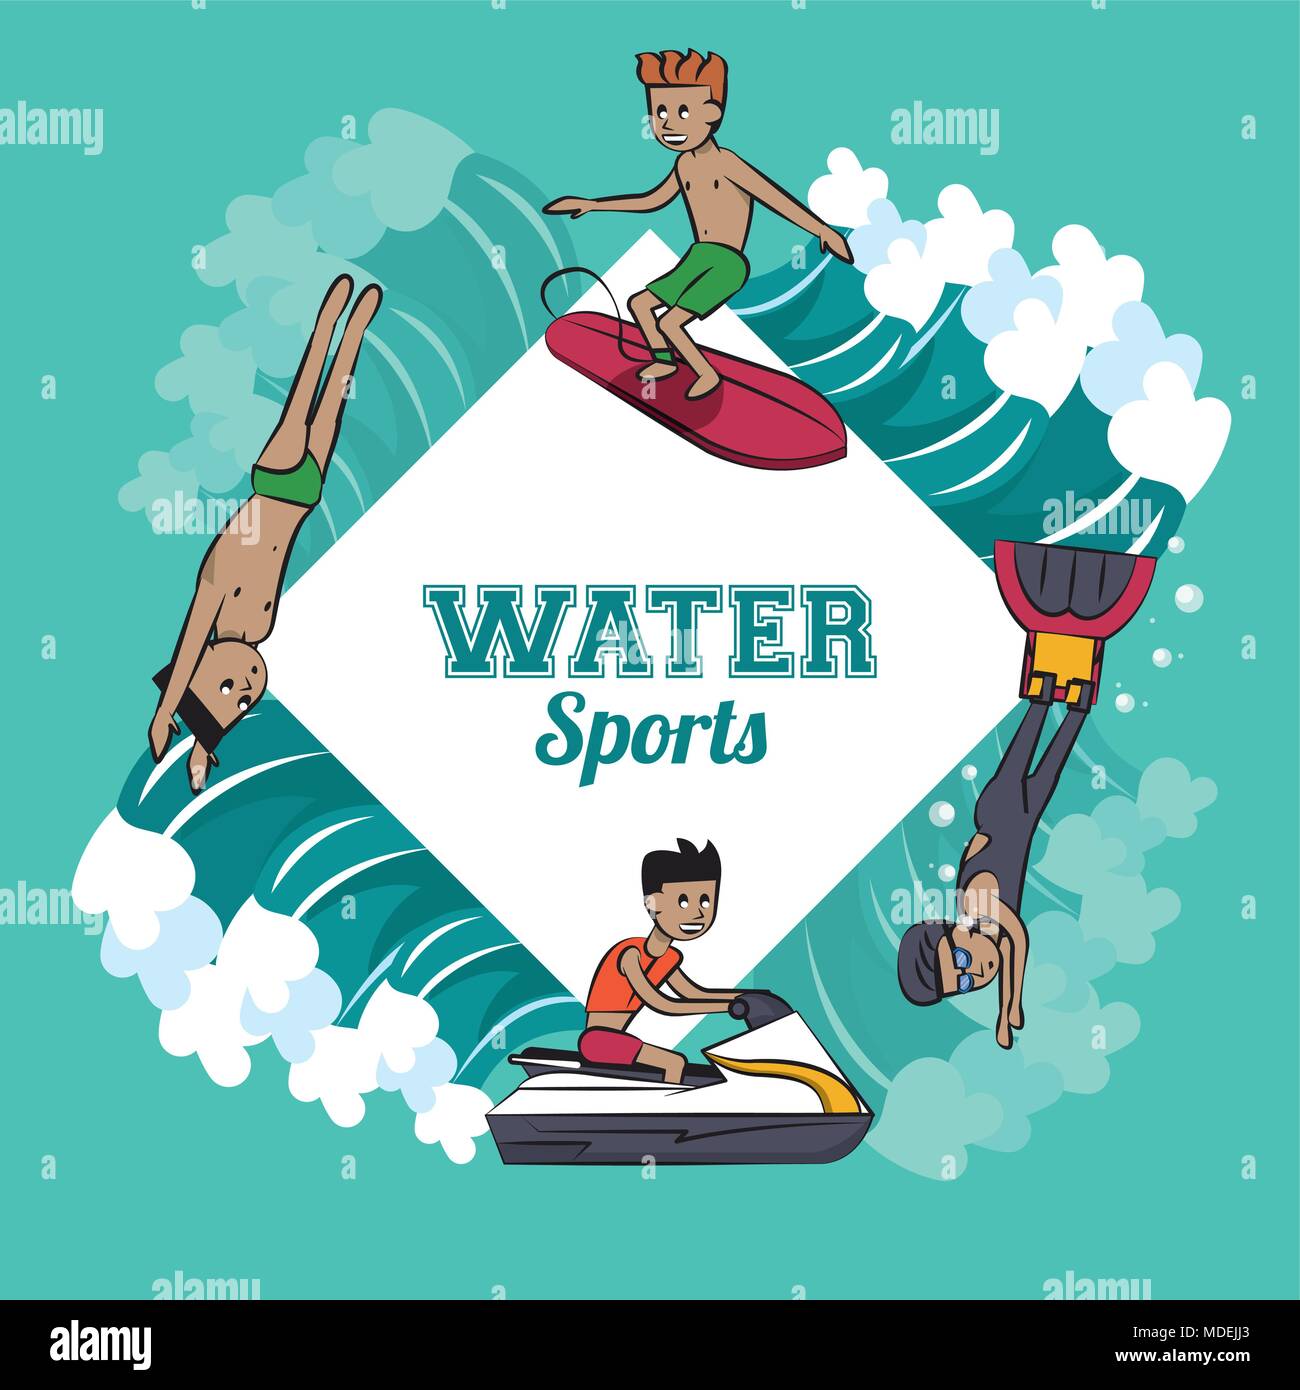 Water sports cartoon Stock Vector